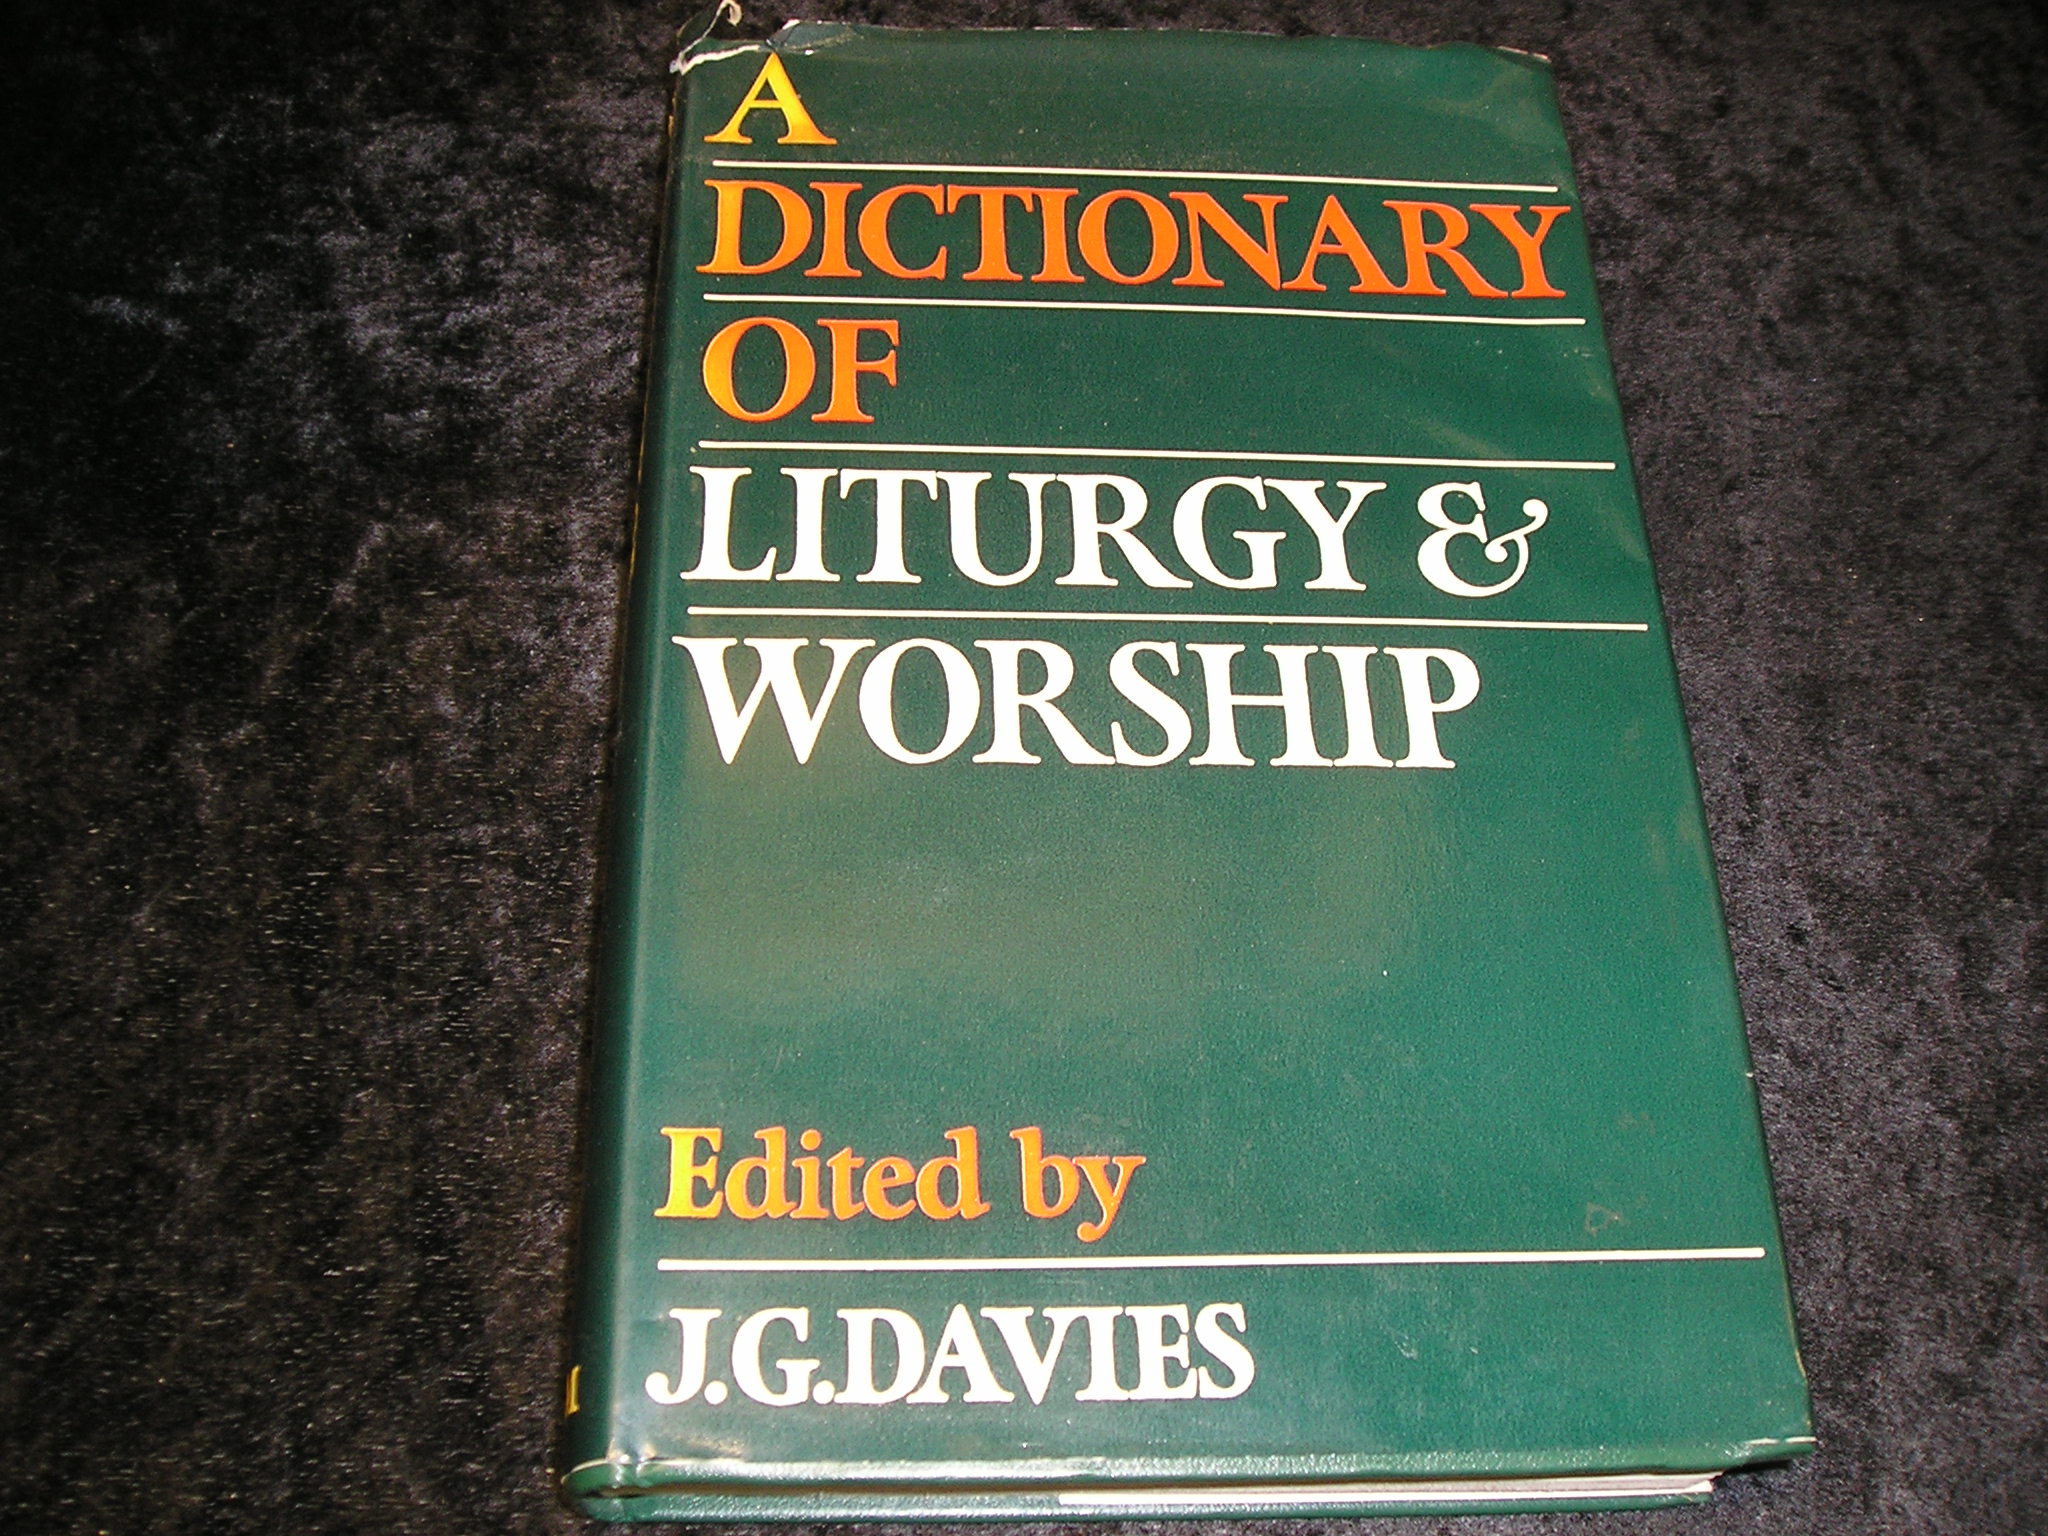 A Dictionary of Liturgy & Worship